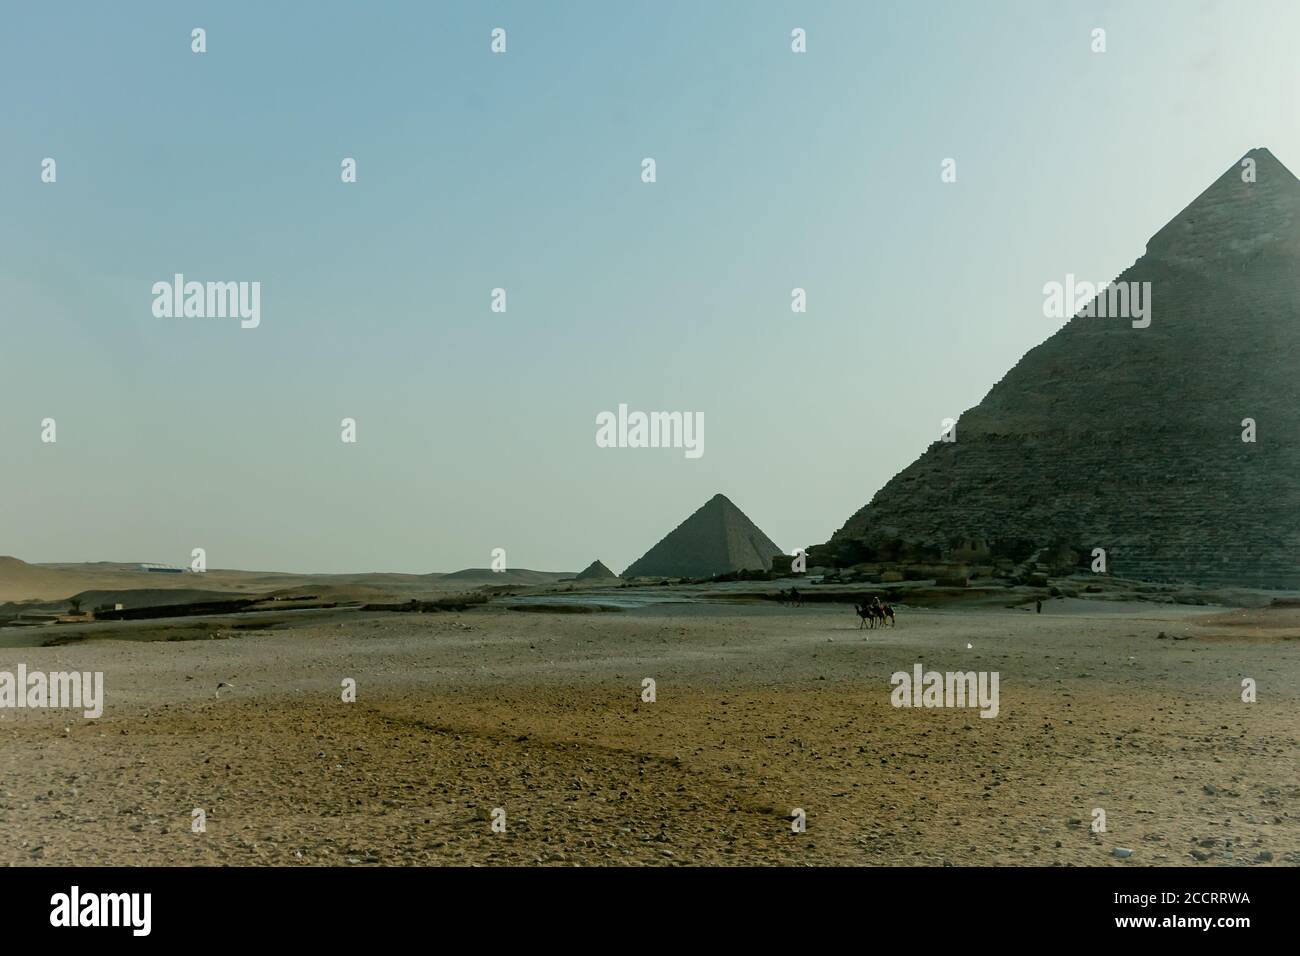 Pyramids of Giza. Cairo. Egypt. Stock Photo